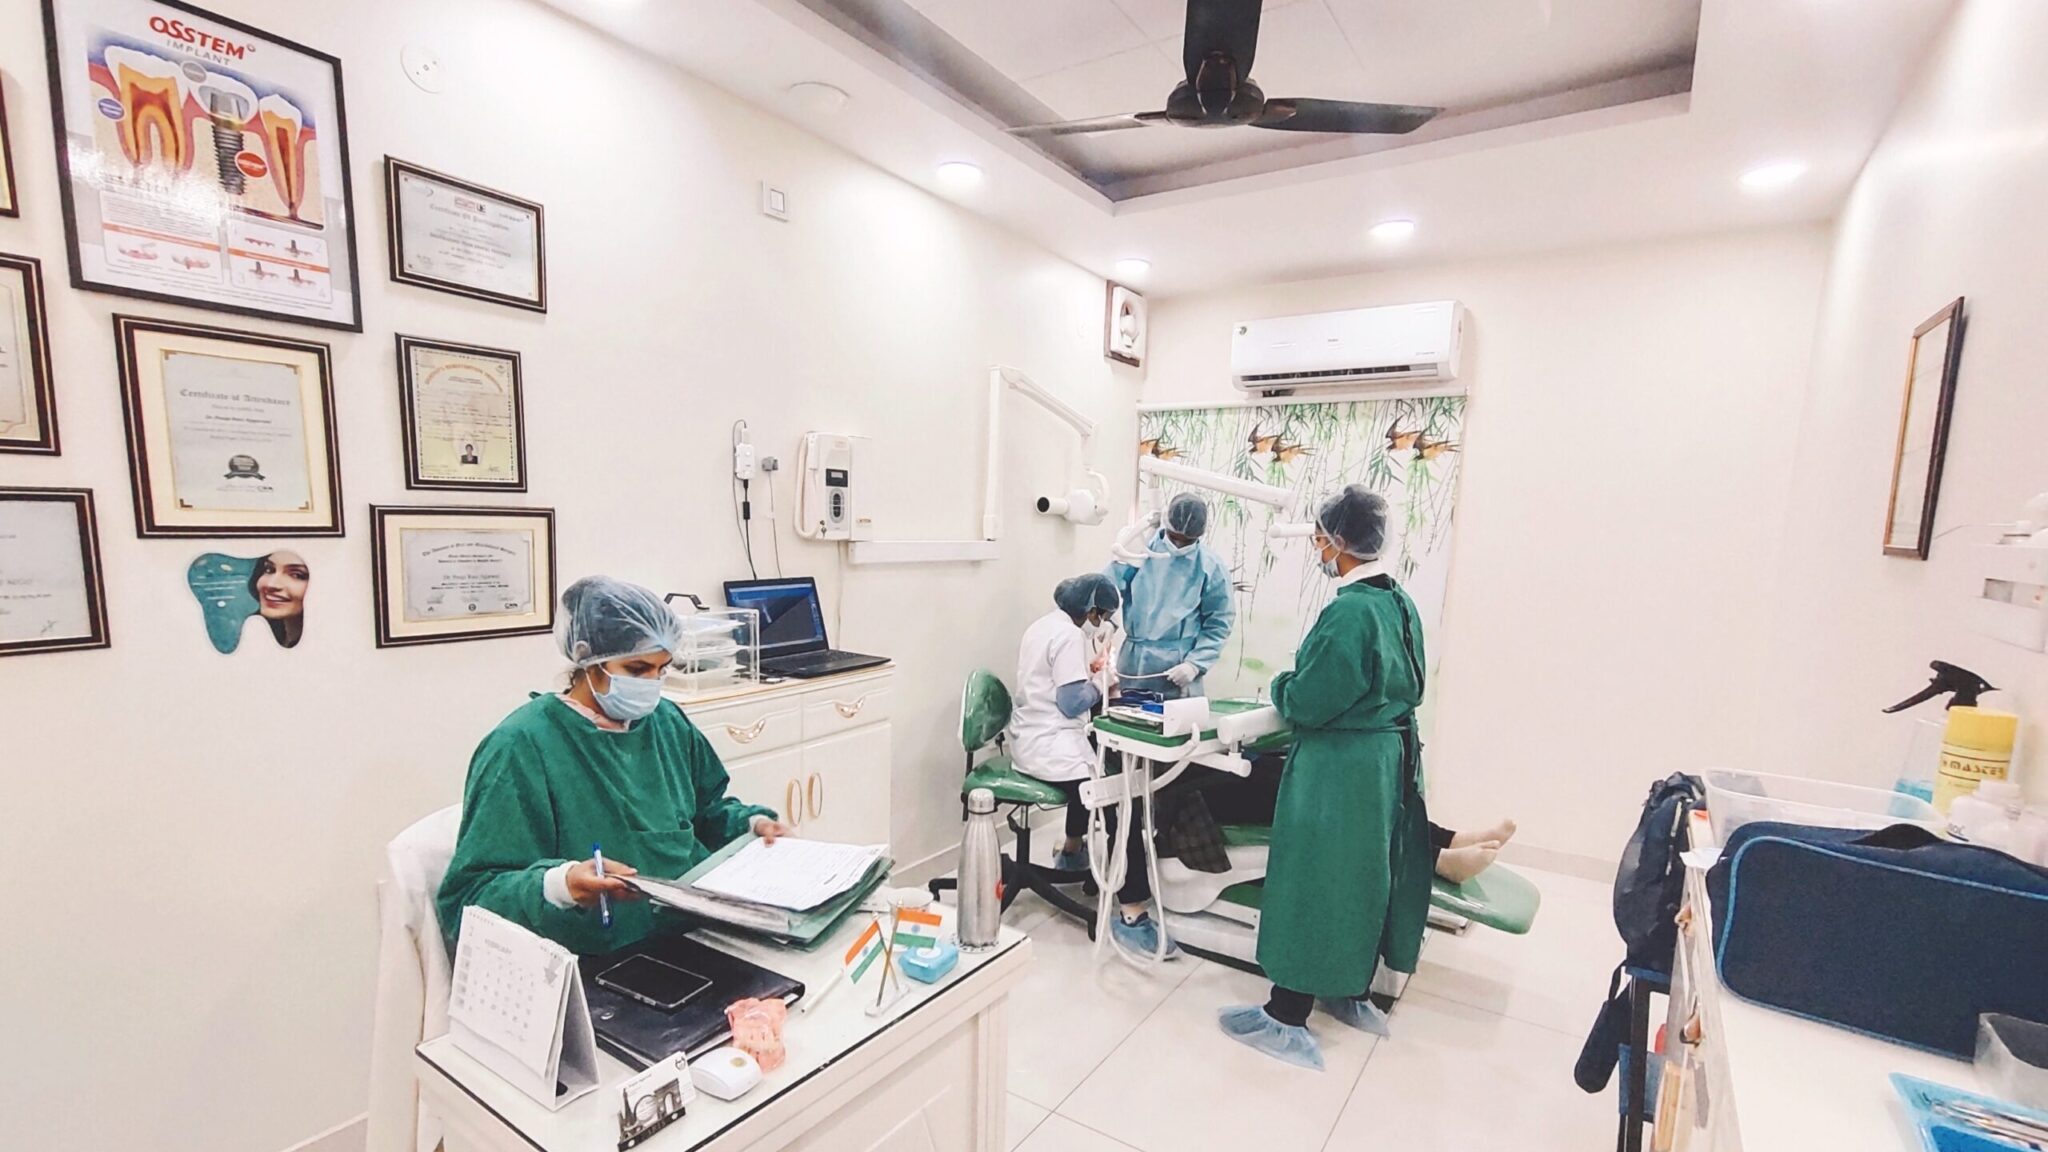 6. Dental Unit 2 for Dental Surgeries & Implants